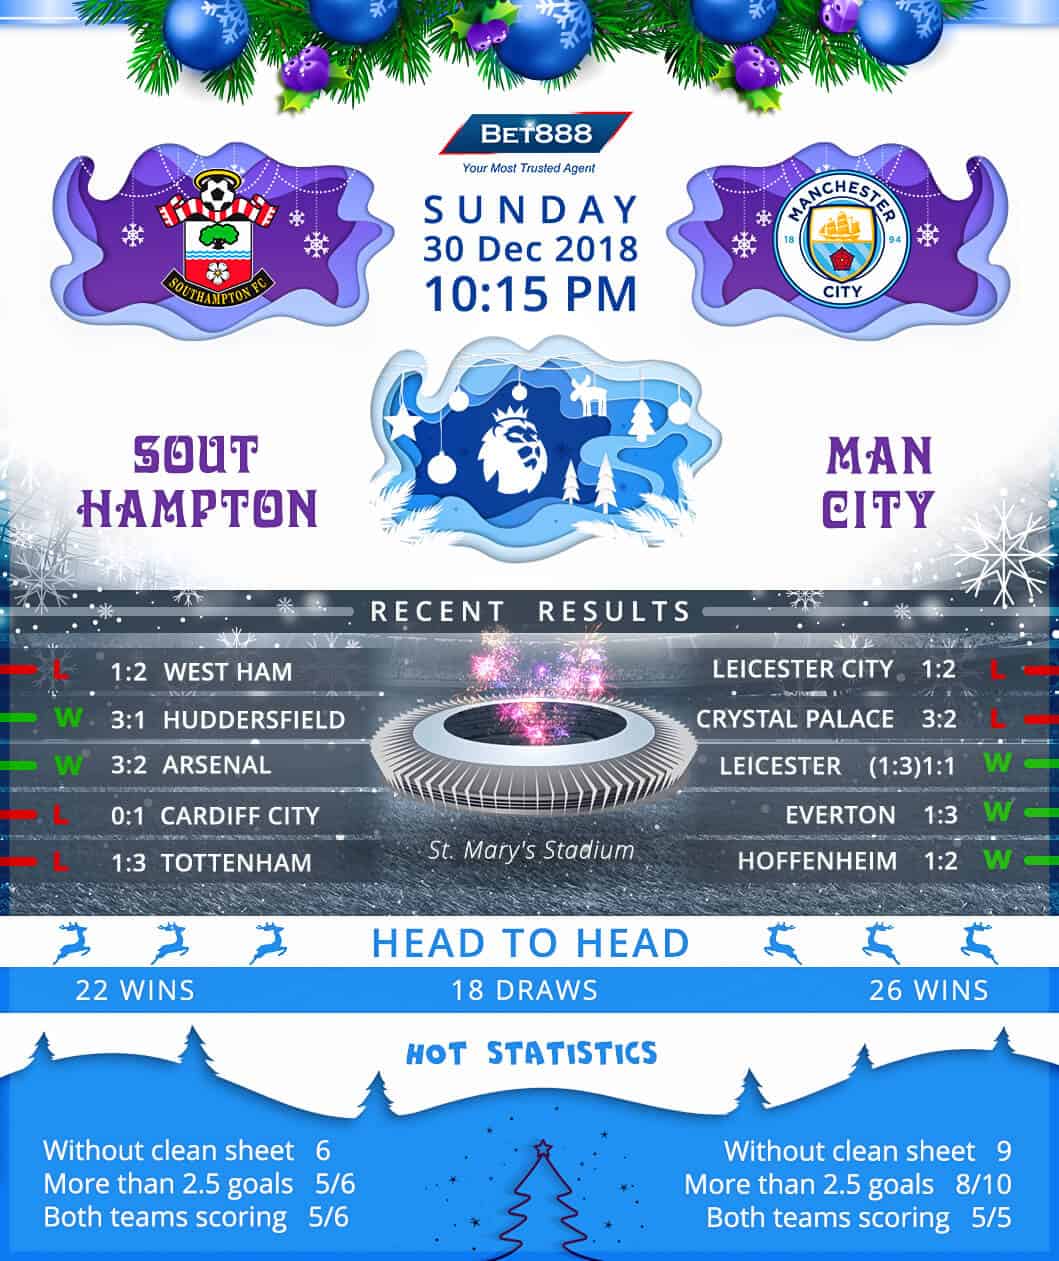 Southampton vs Manchester City 30/12/18